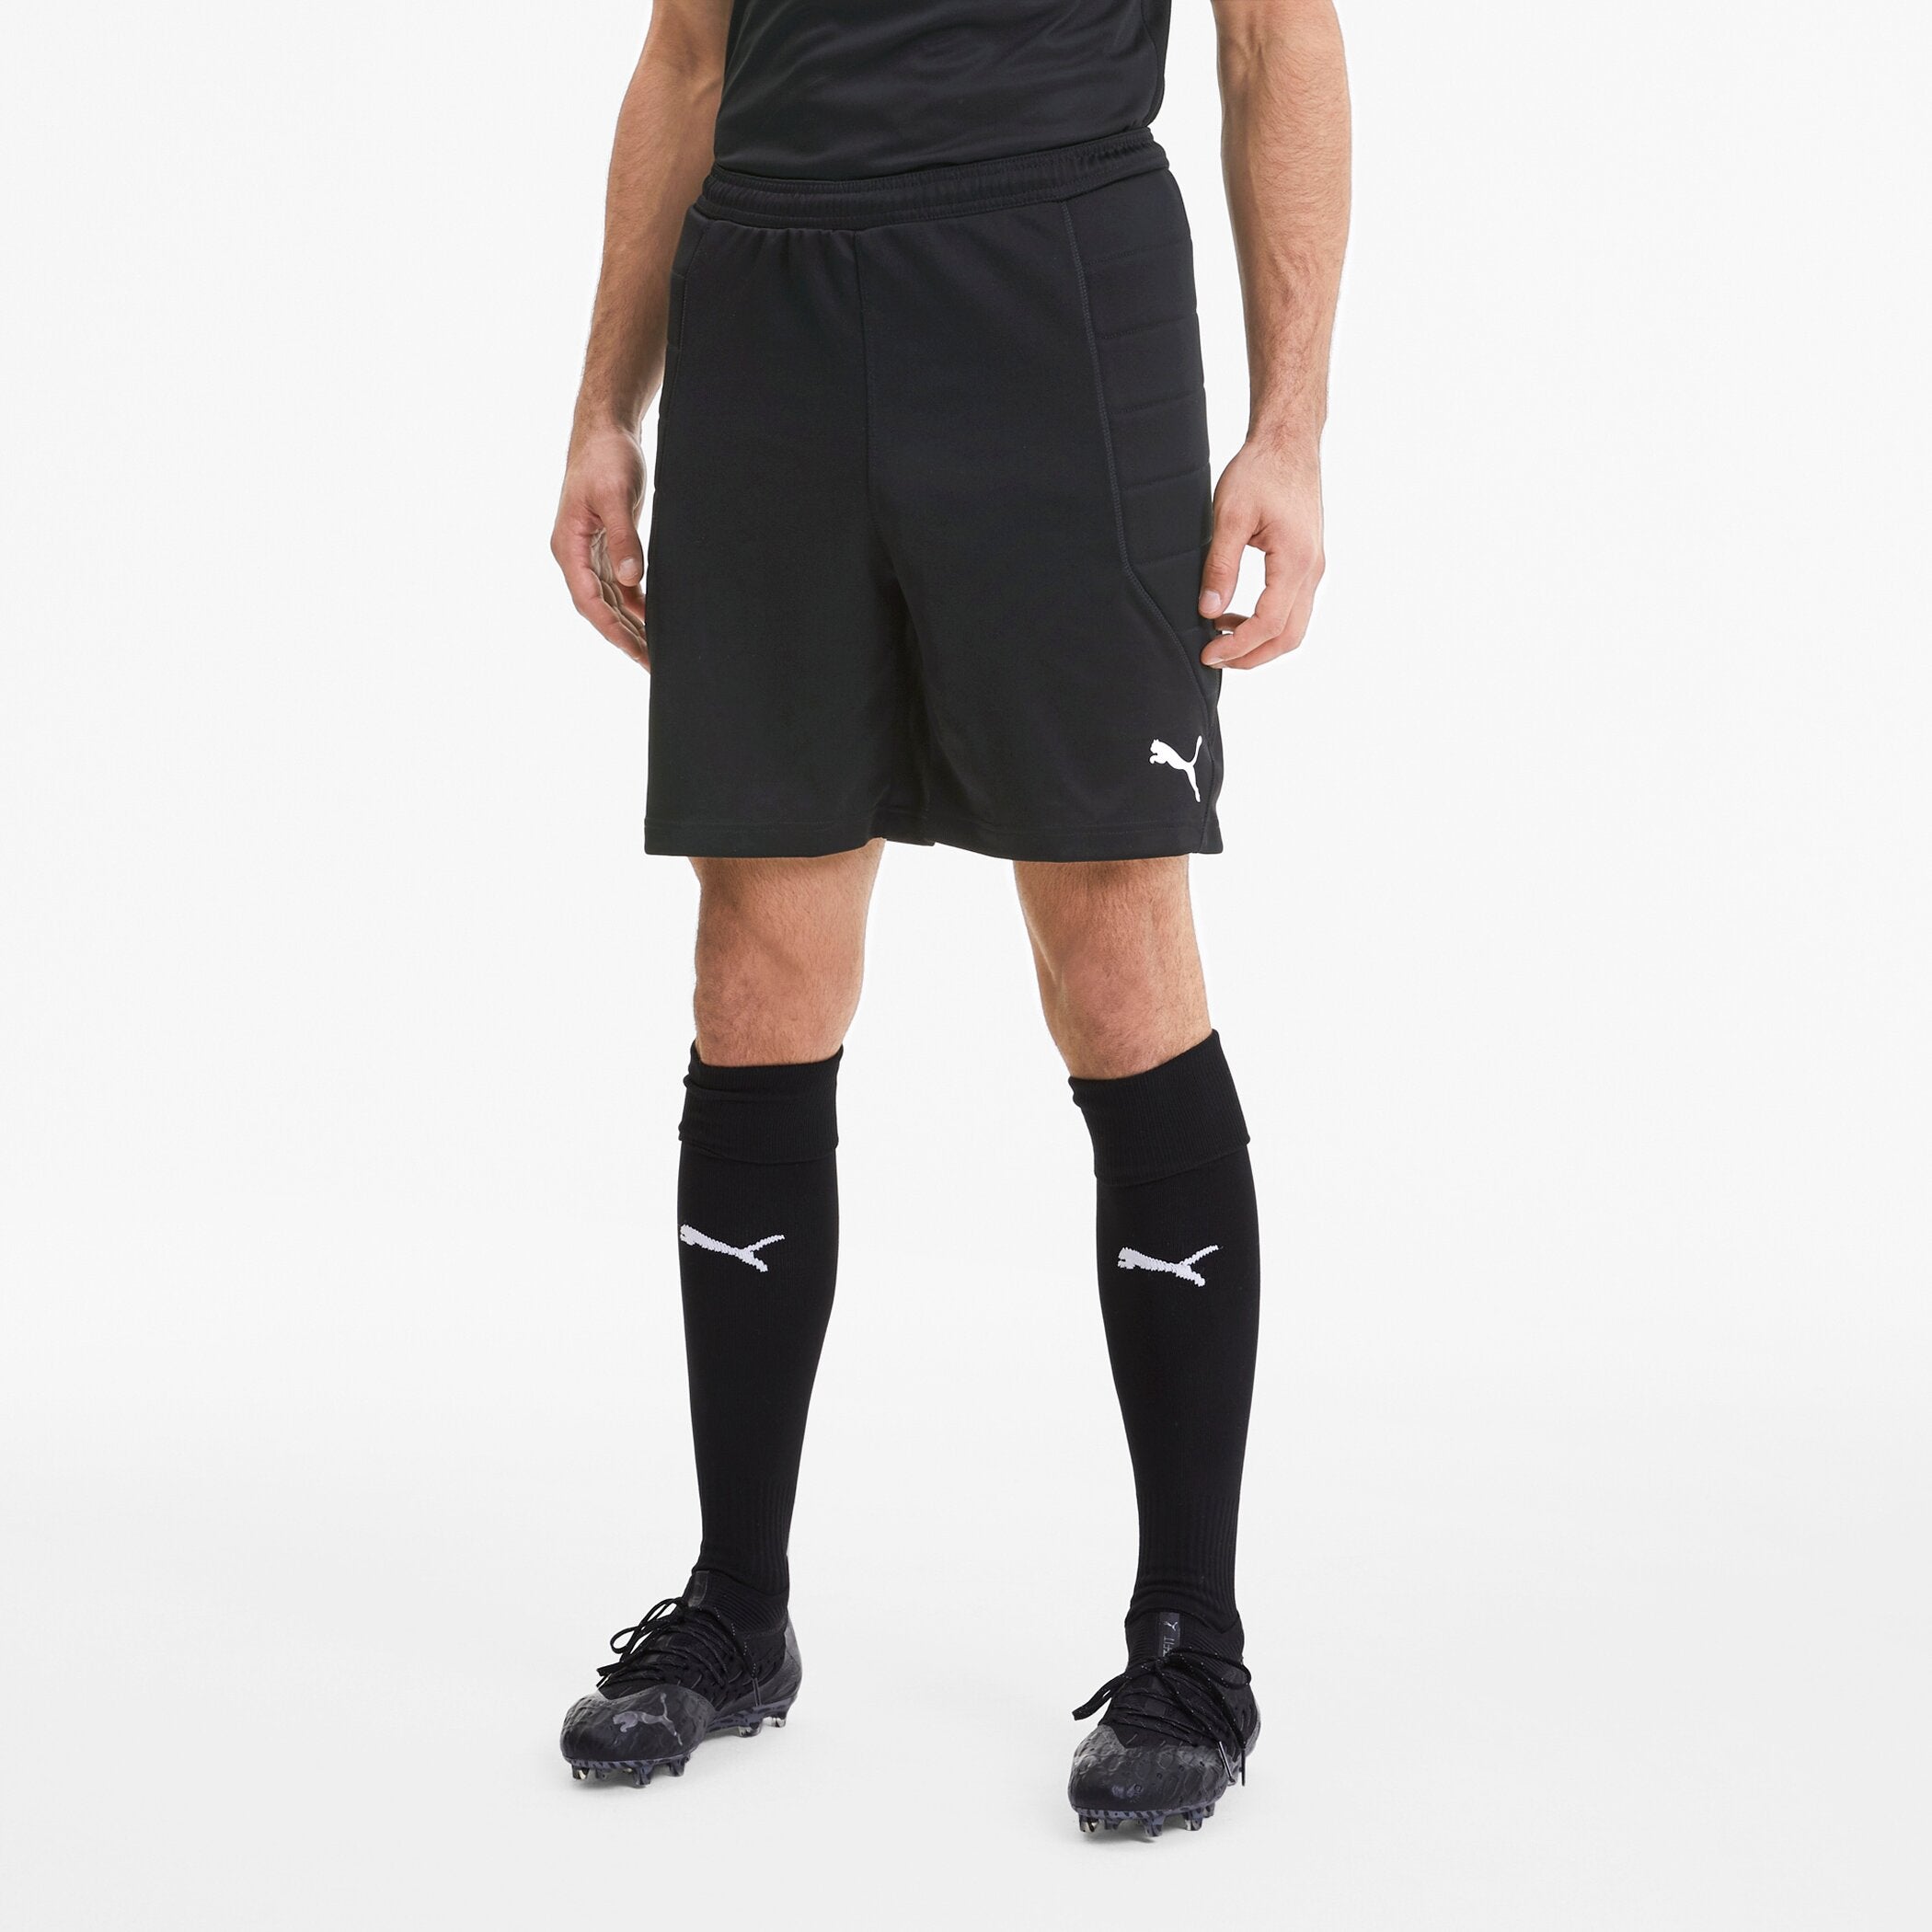 Fußball - Teamsport Textil - Torwarthosen Goalkeeper Short Torwartshort